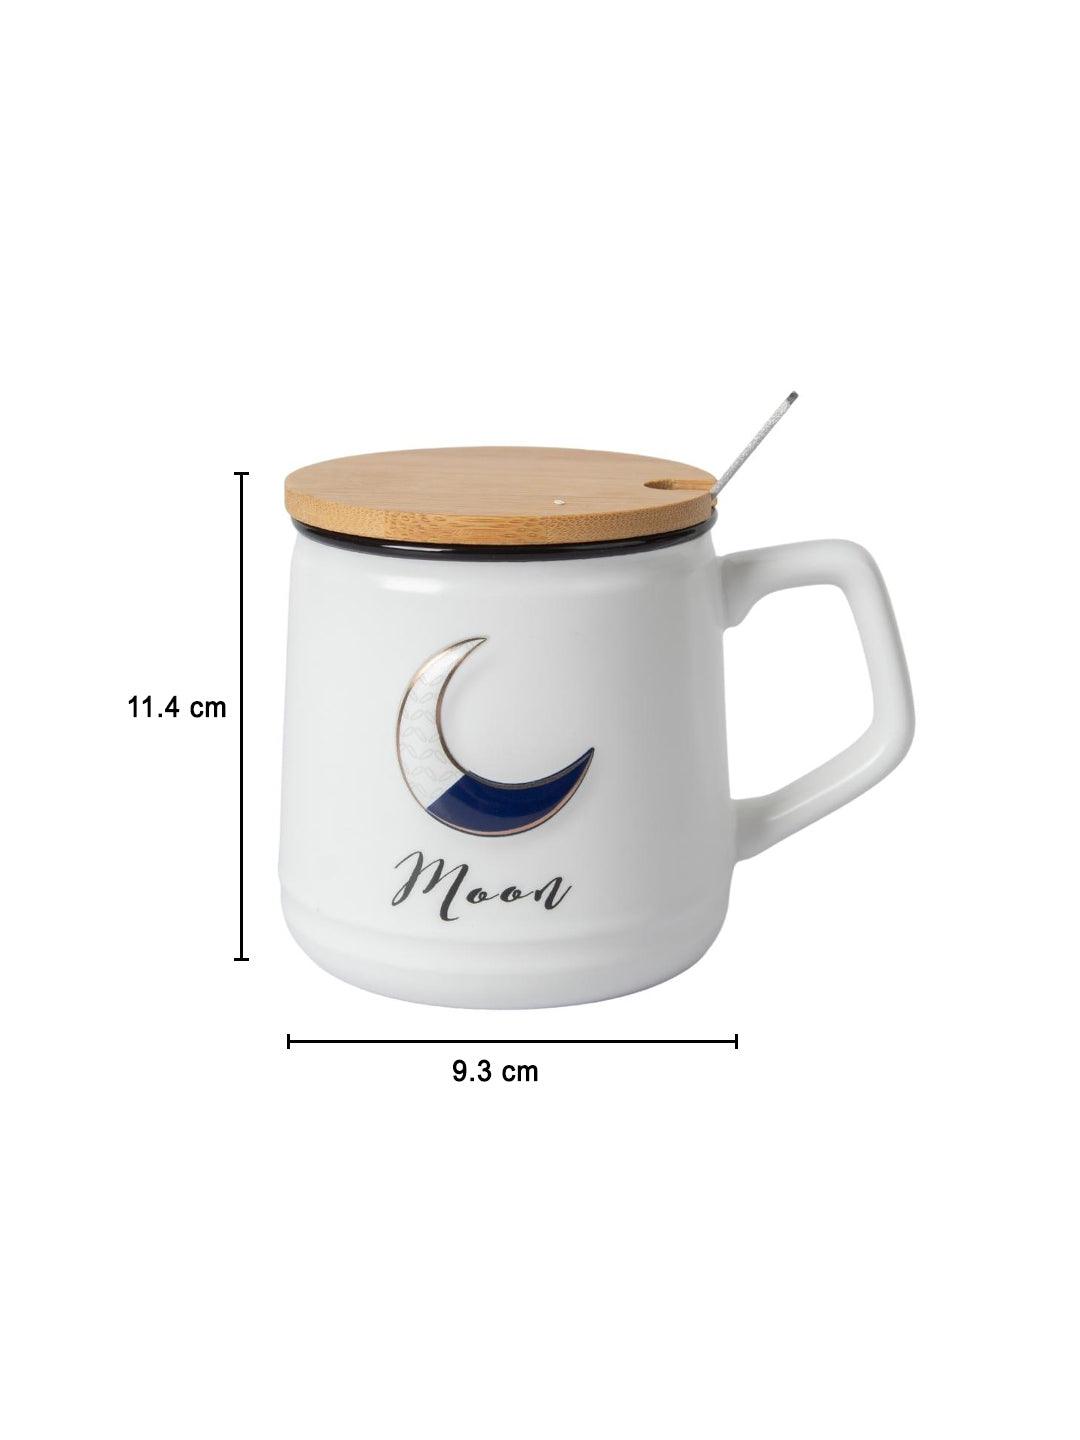 Moon Ceramic Coffee Mug With Lid - 350 ml, Mixing Spoon